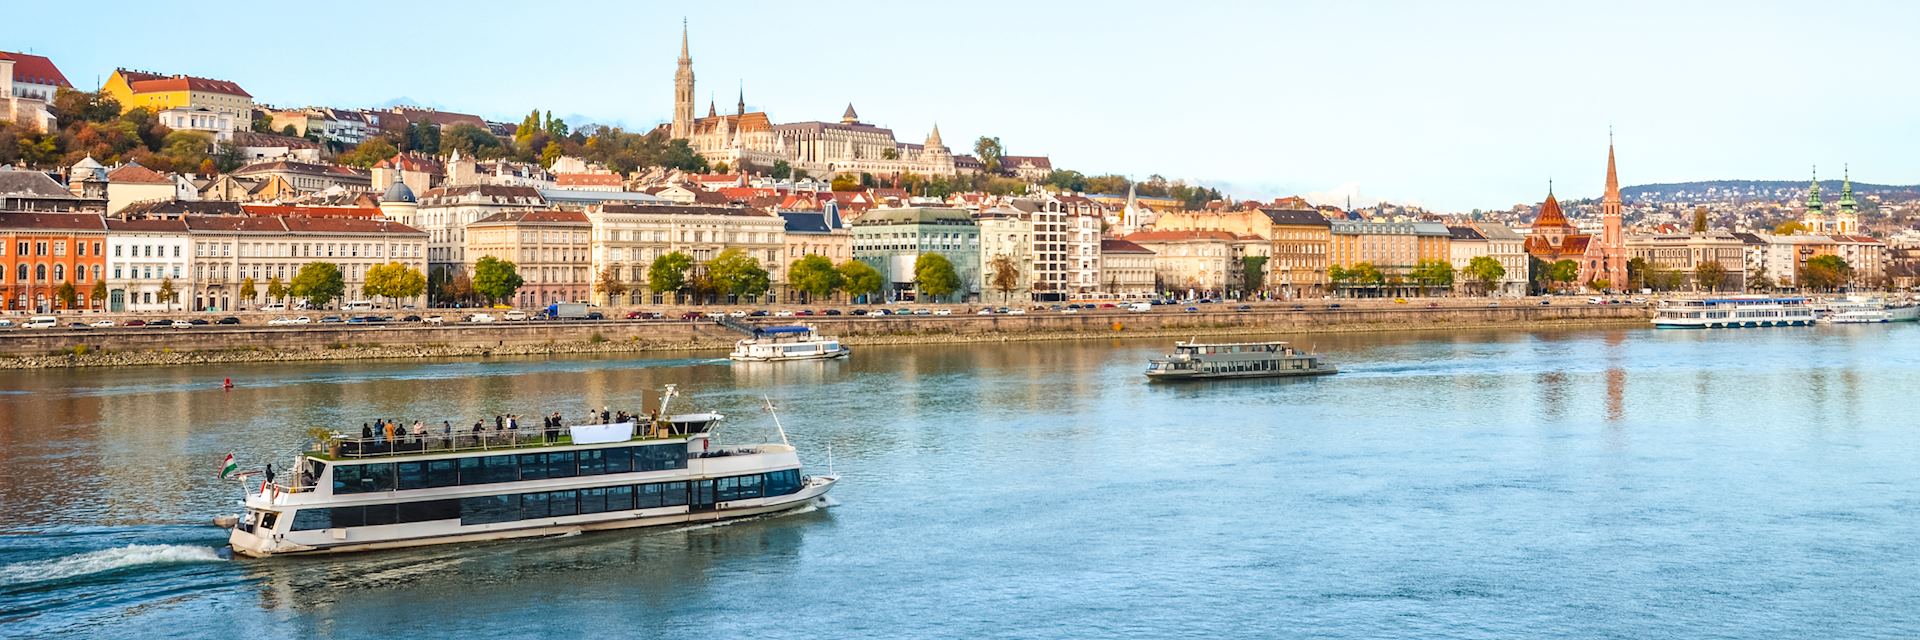 Danube boat trip through Budapest